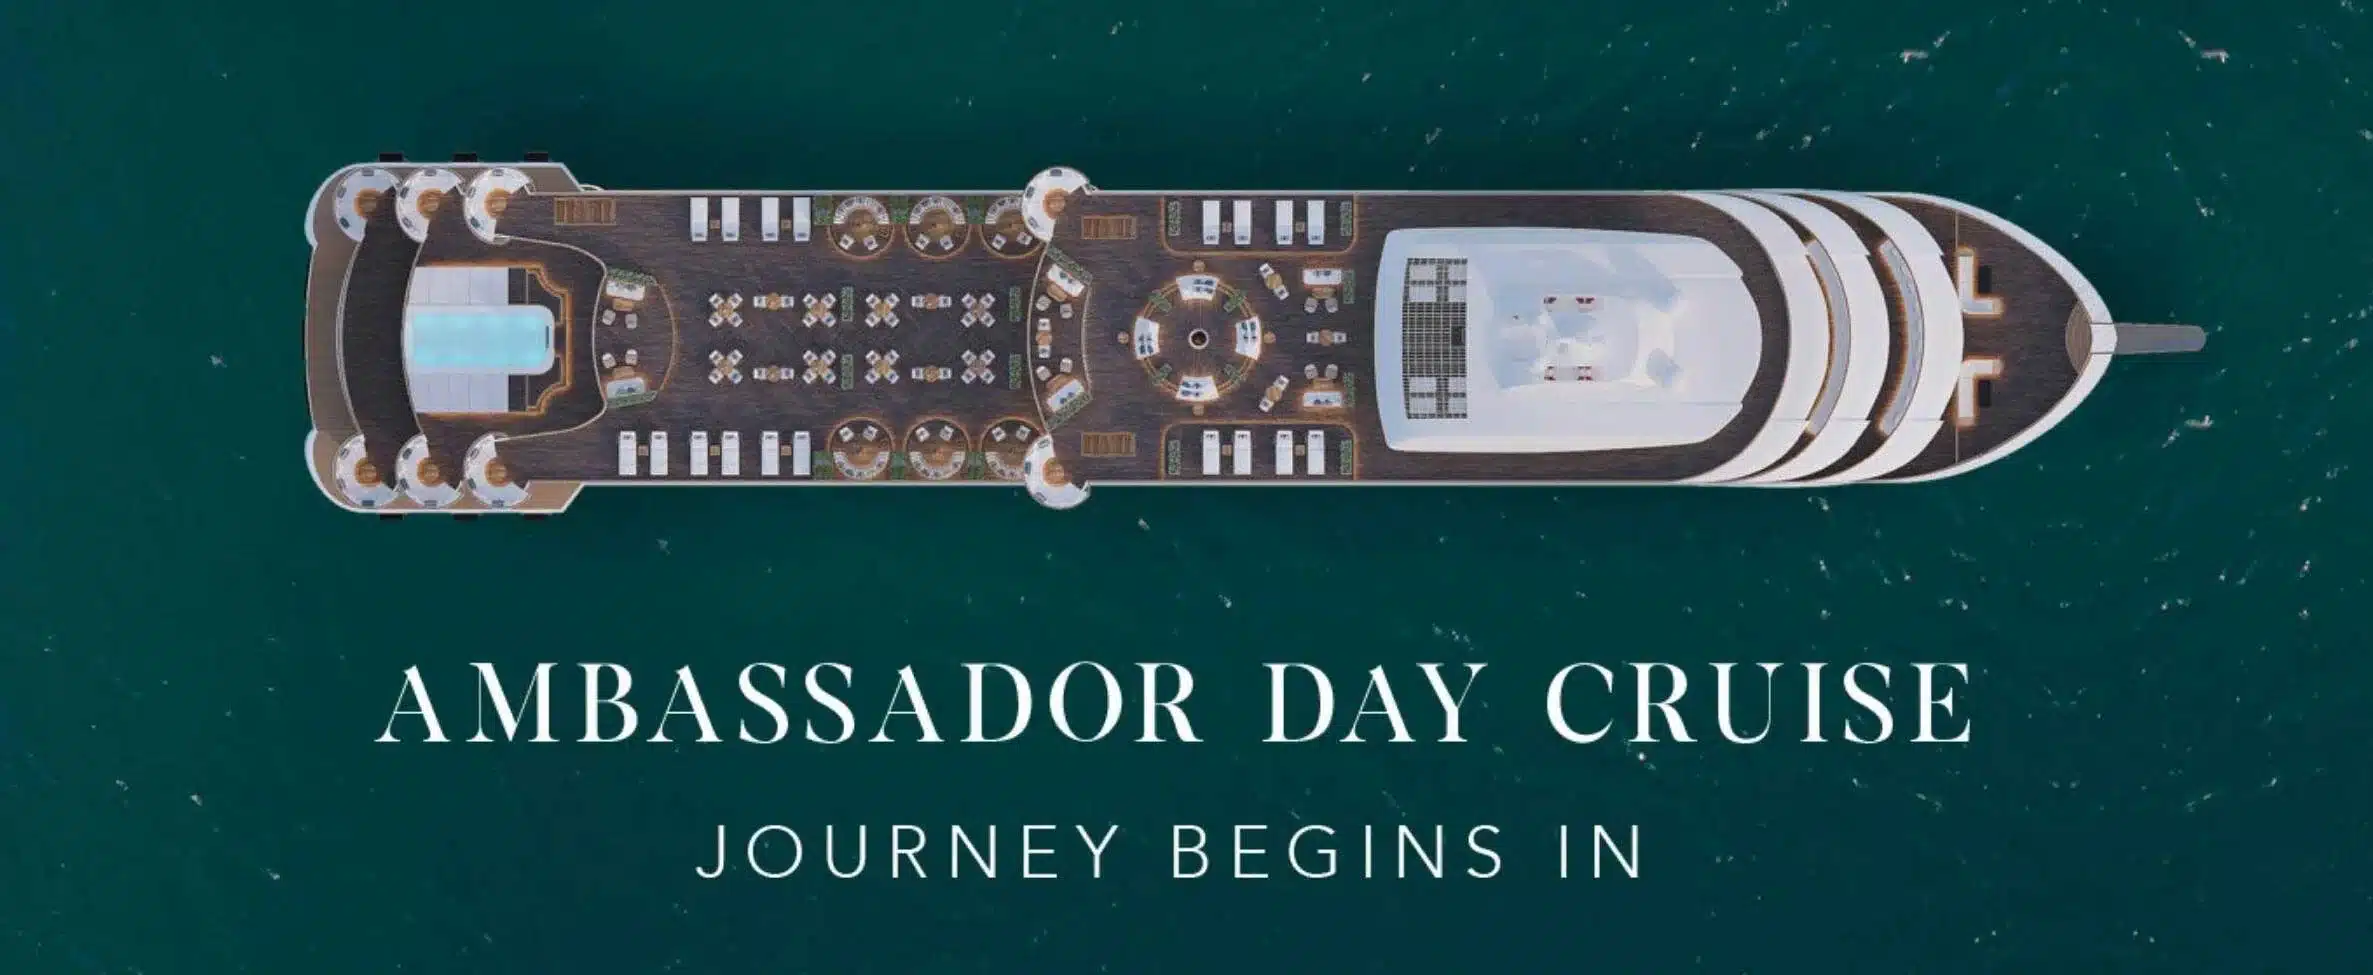 ambassador day cruises ii idtc international 2